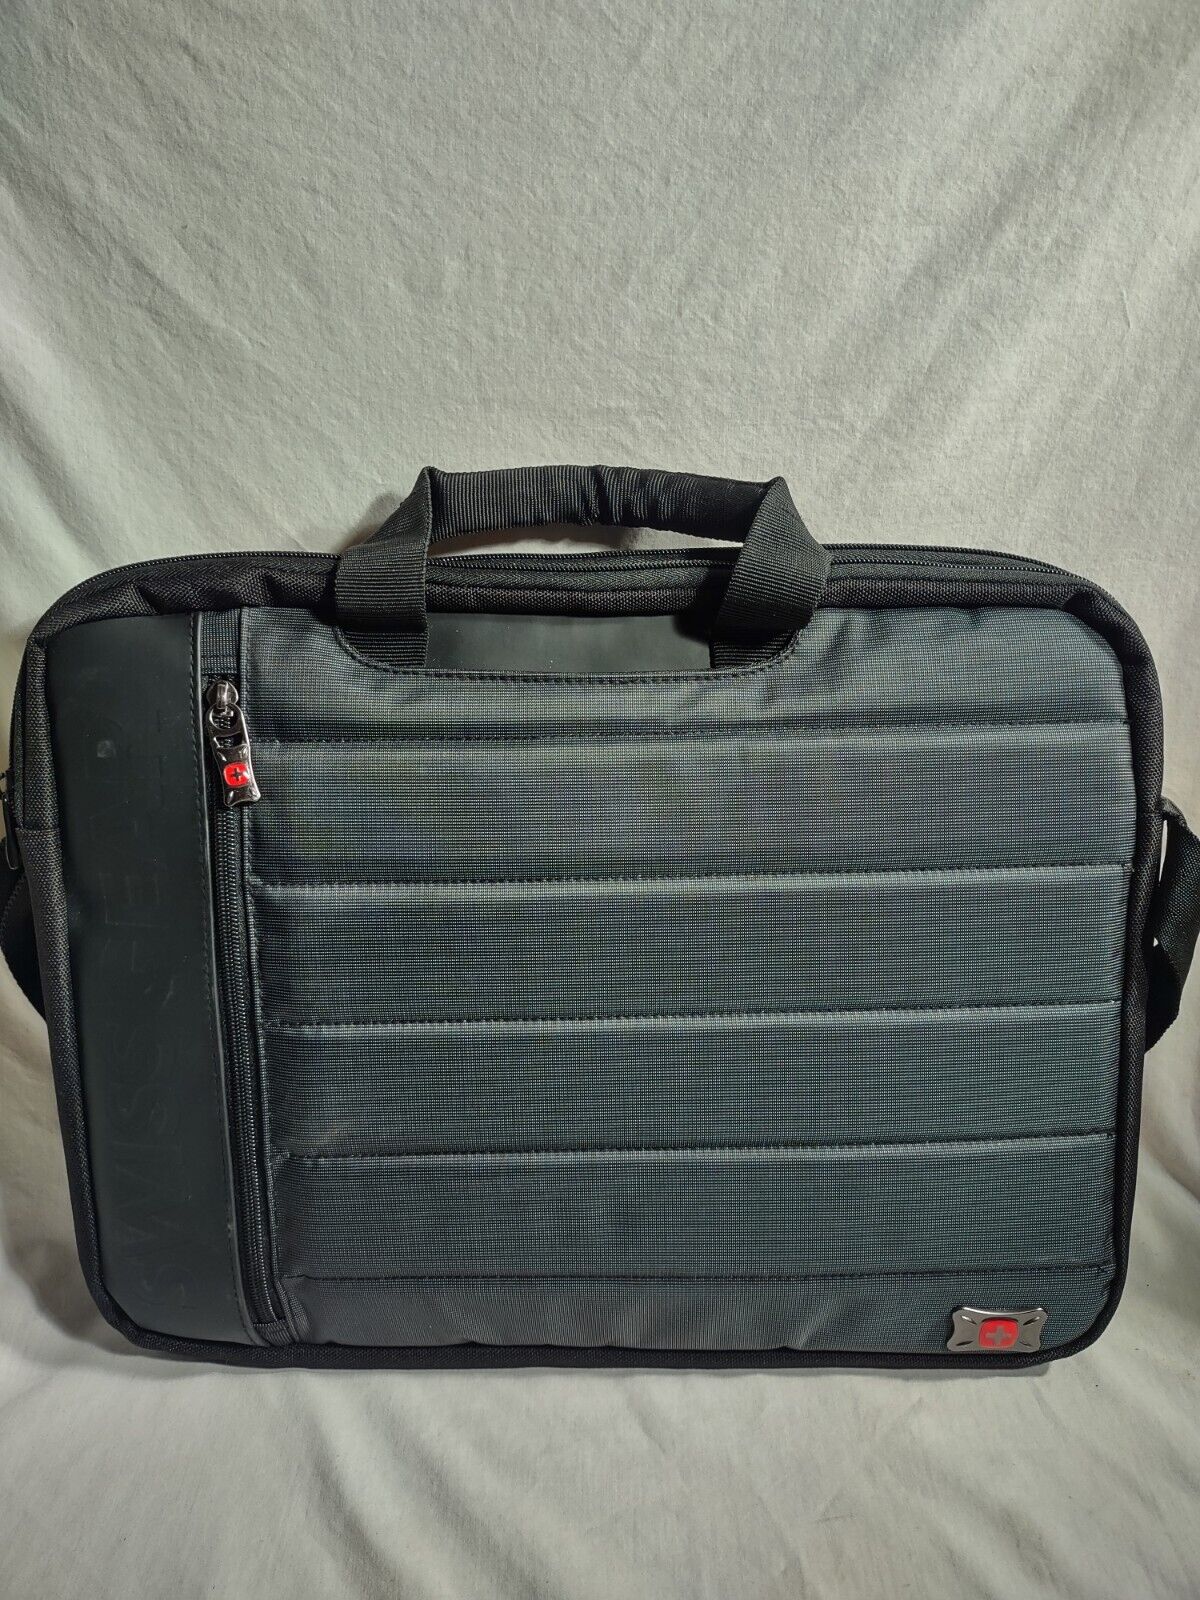 Swiss Gear 15” Laptop Shoulder Strap Computer Case Messenger Travel Bag Gray